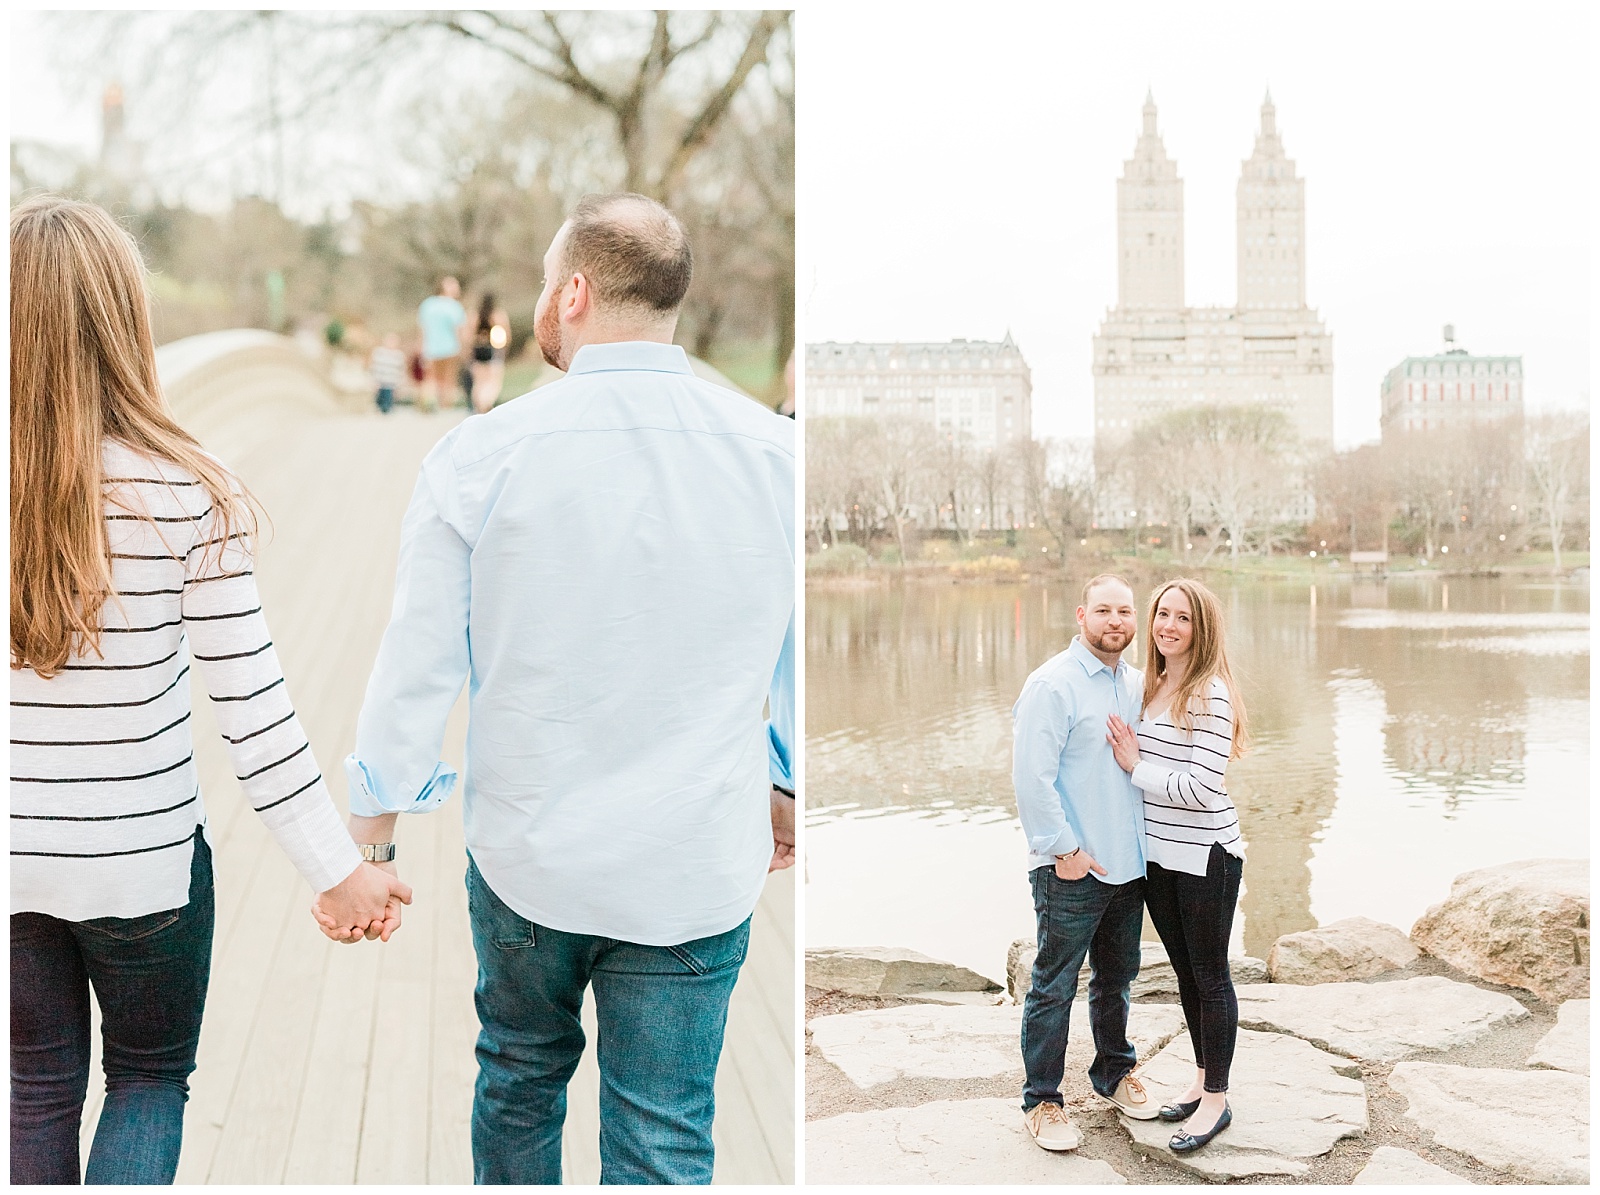 Central Park, NYC engagement session, springtime, wedding photographer, New York, bow bridge